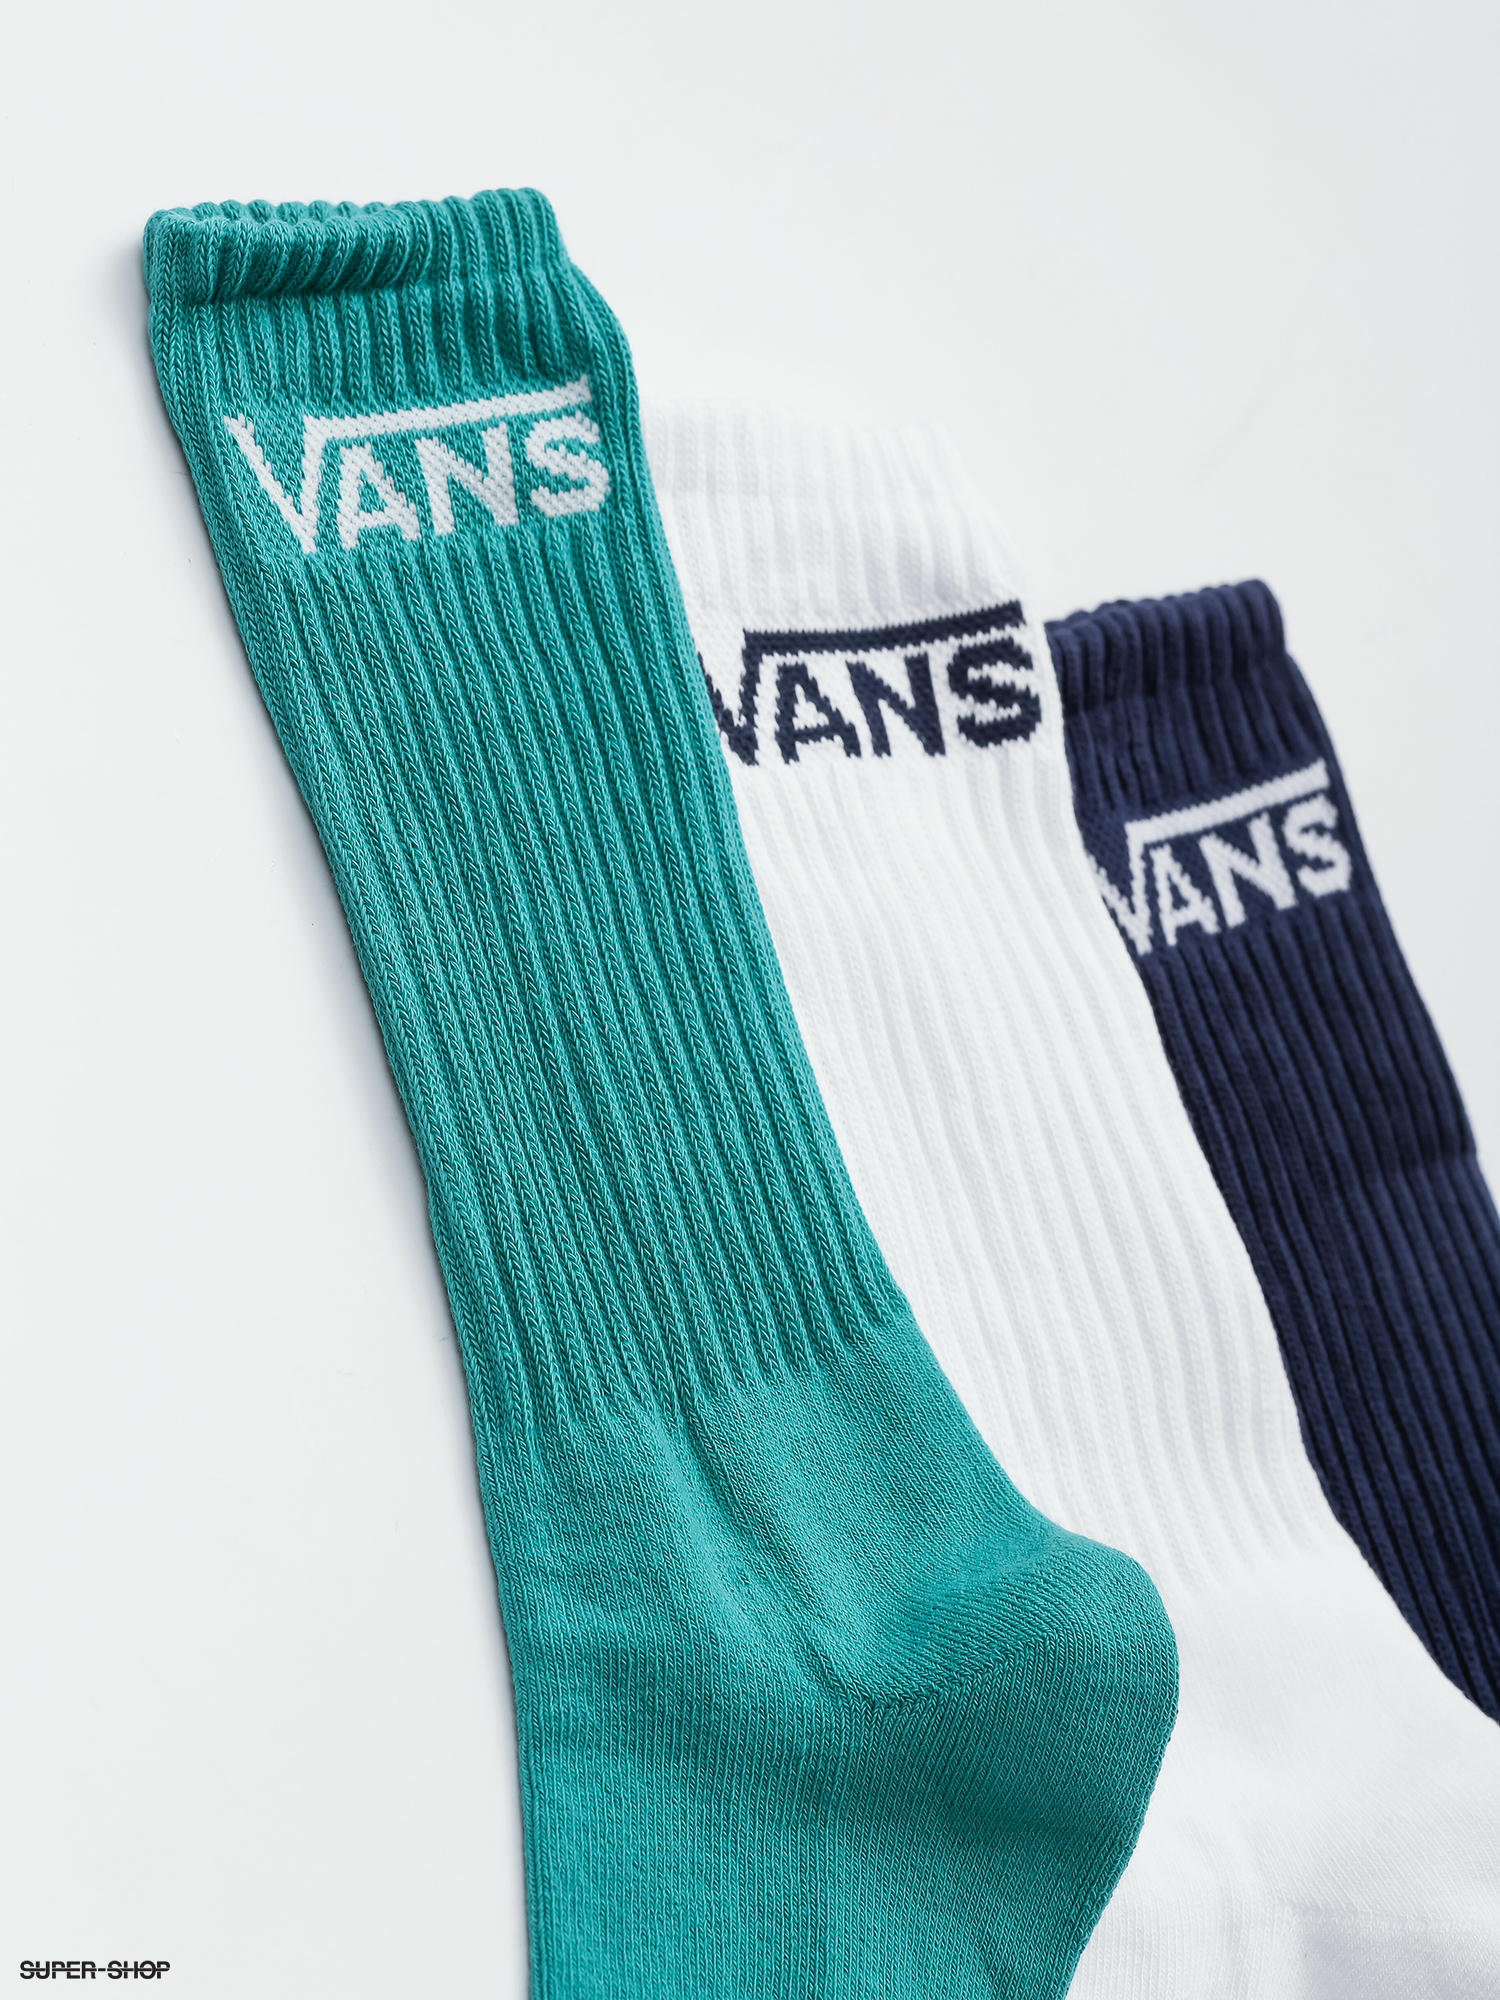 vans classic crew socks